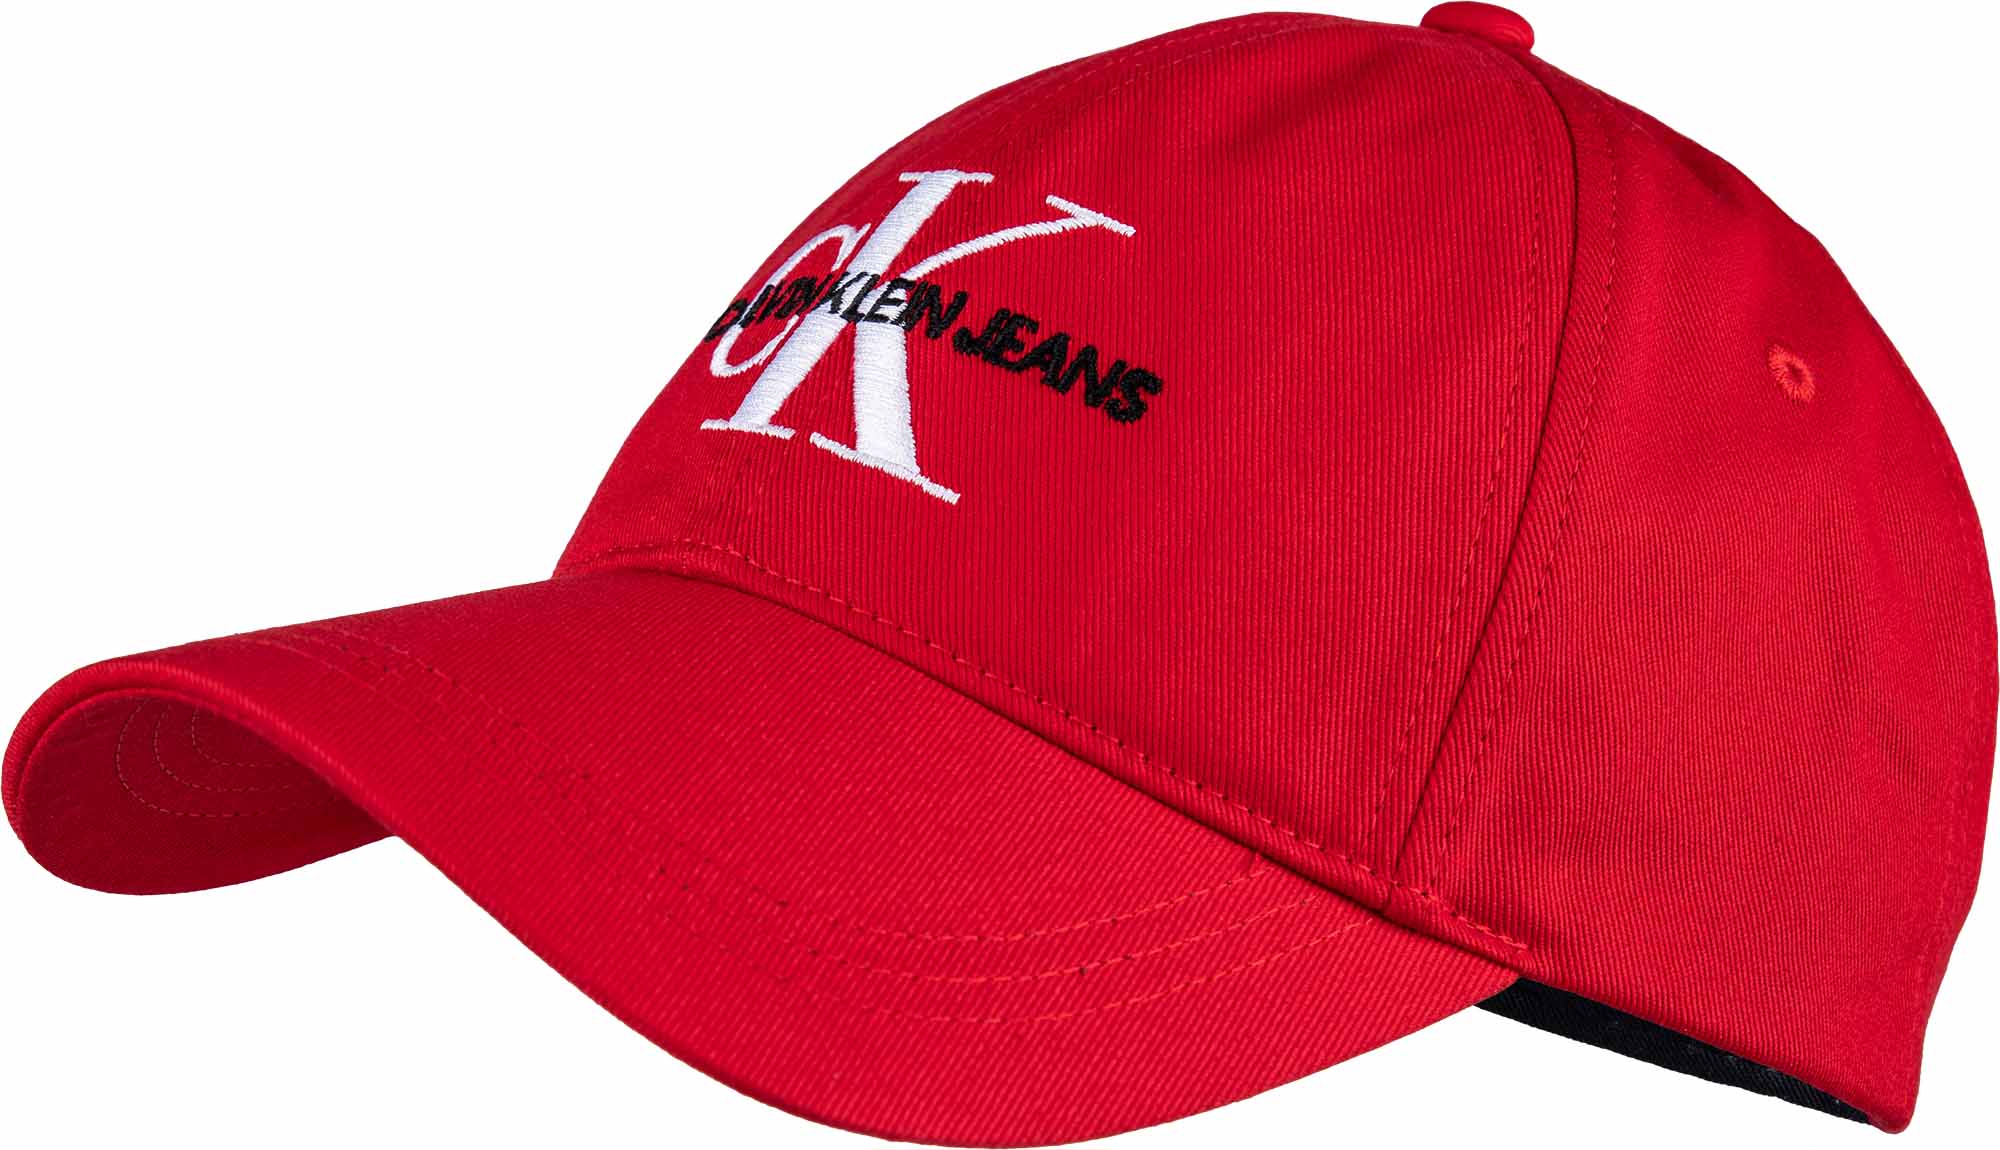 Unisex baseball cap